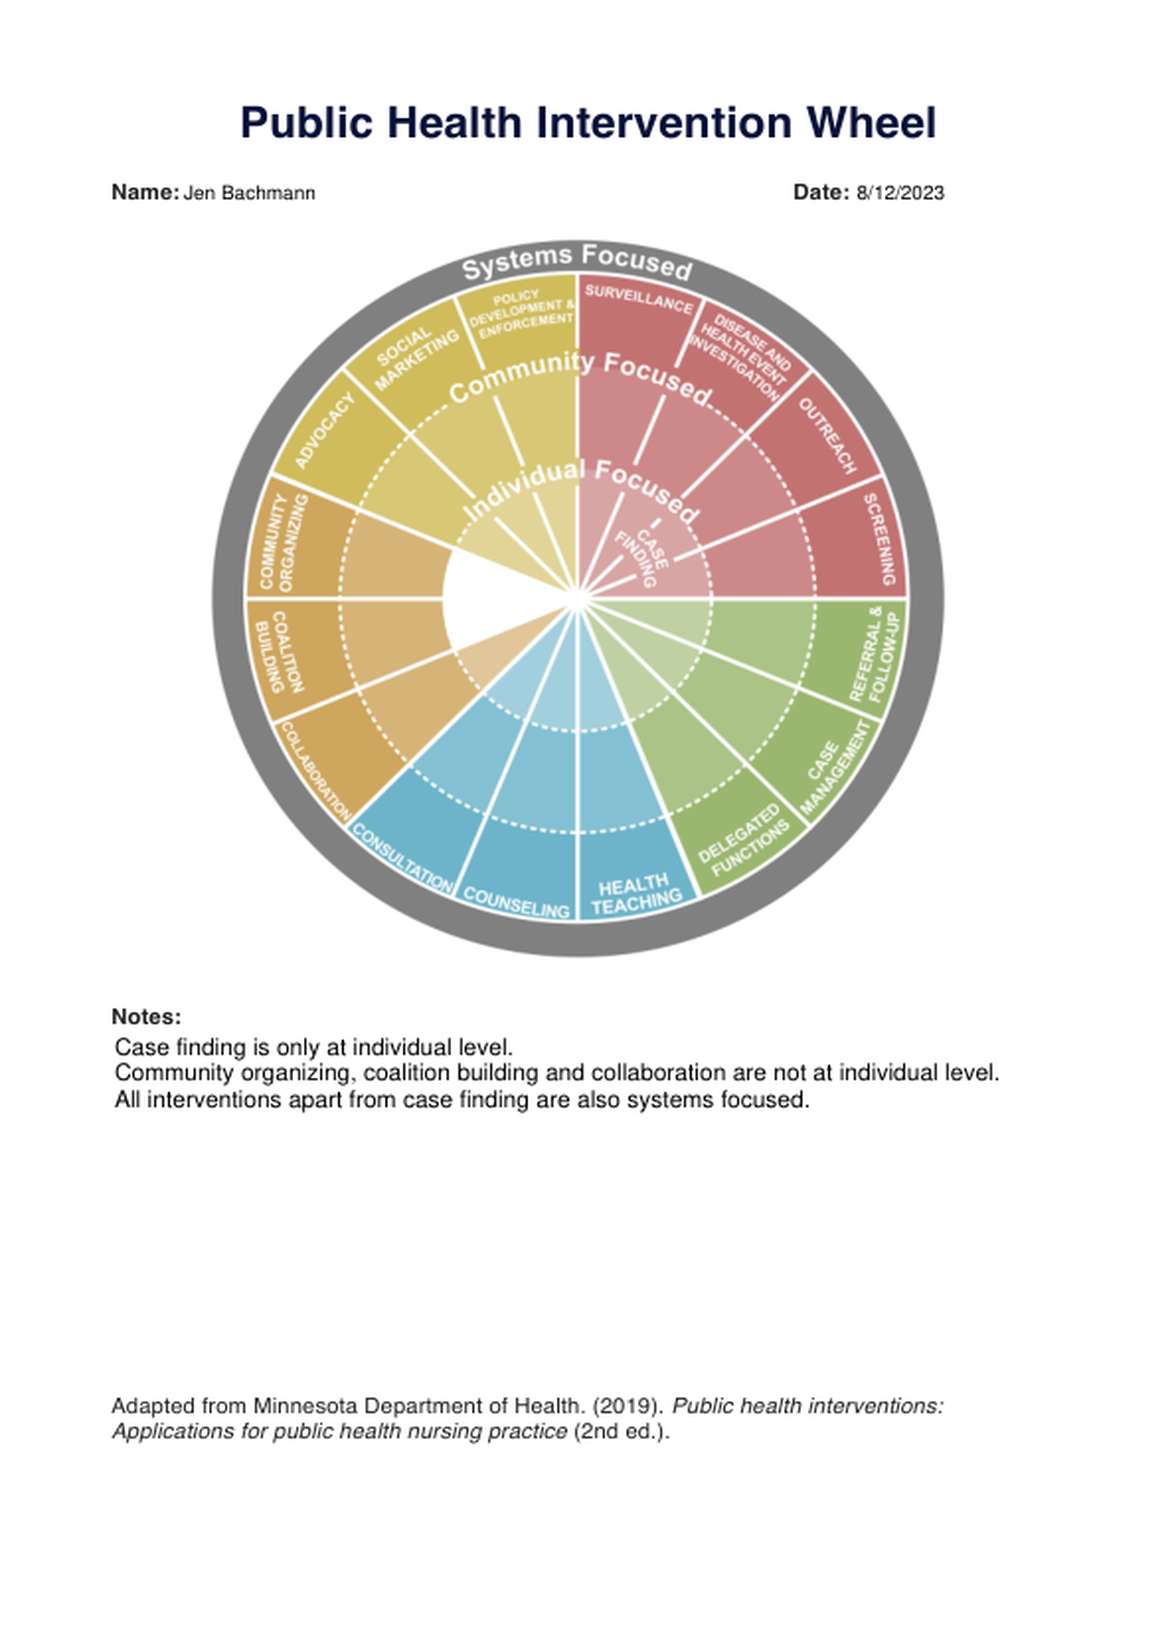 Public Health Intervention Wheel PDF Example